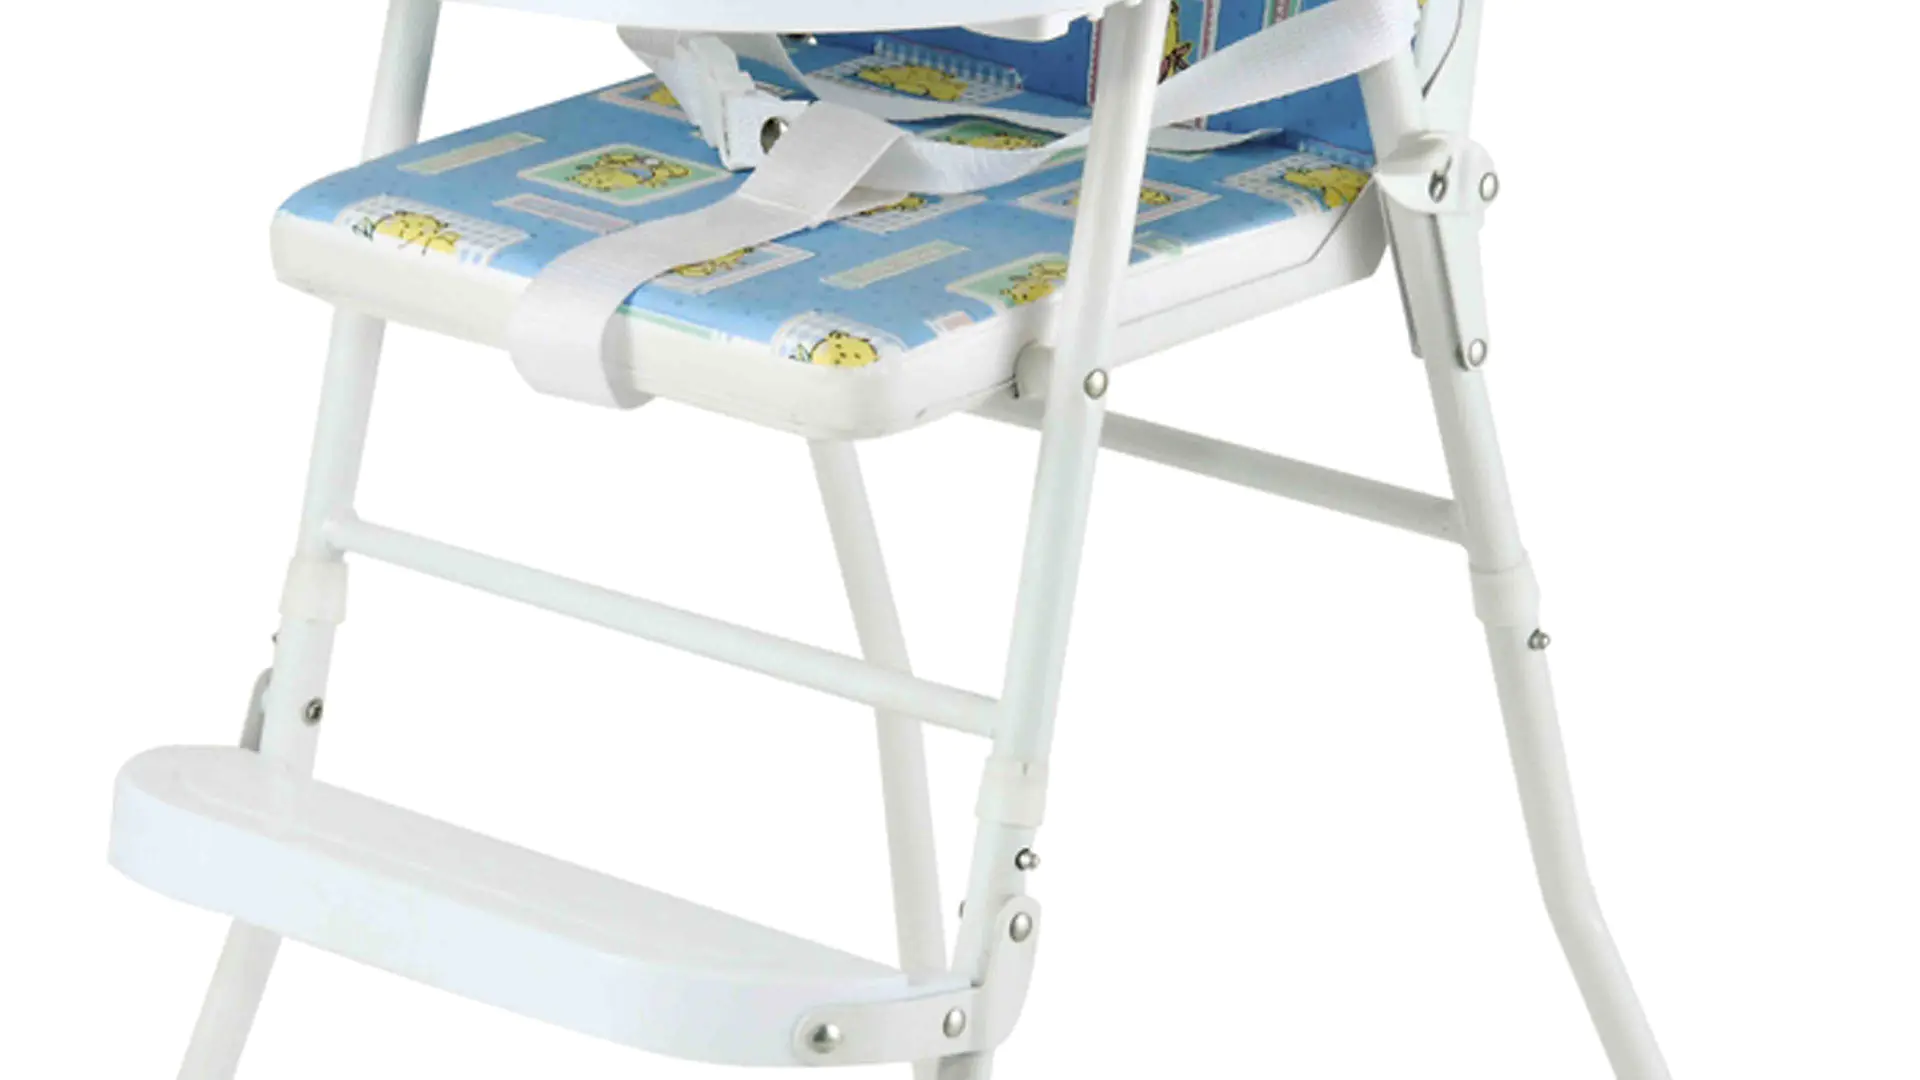 Aoqi baby feeding high chair customized for livingroom